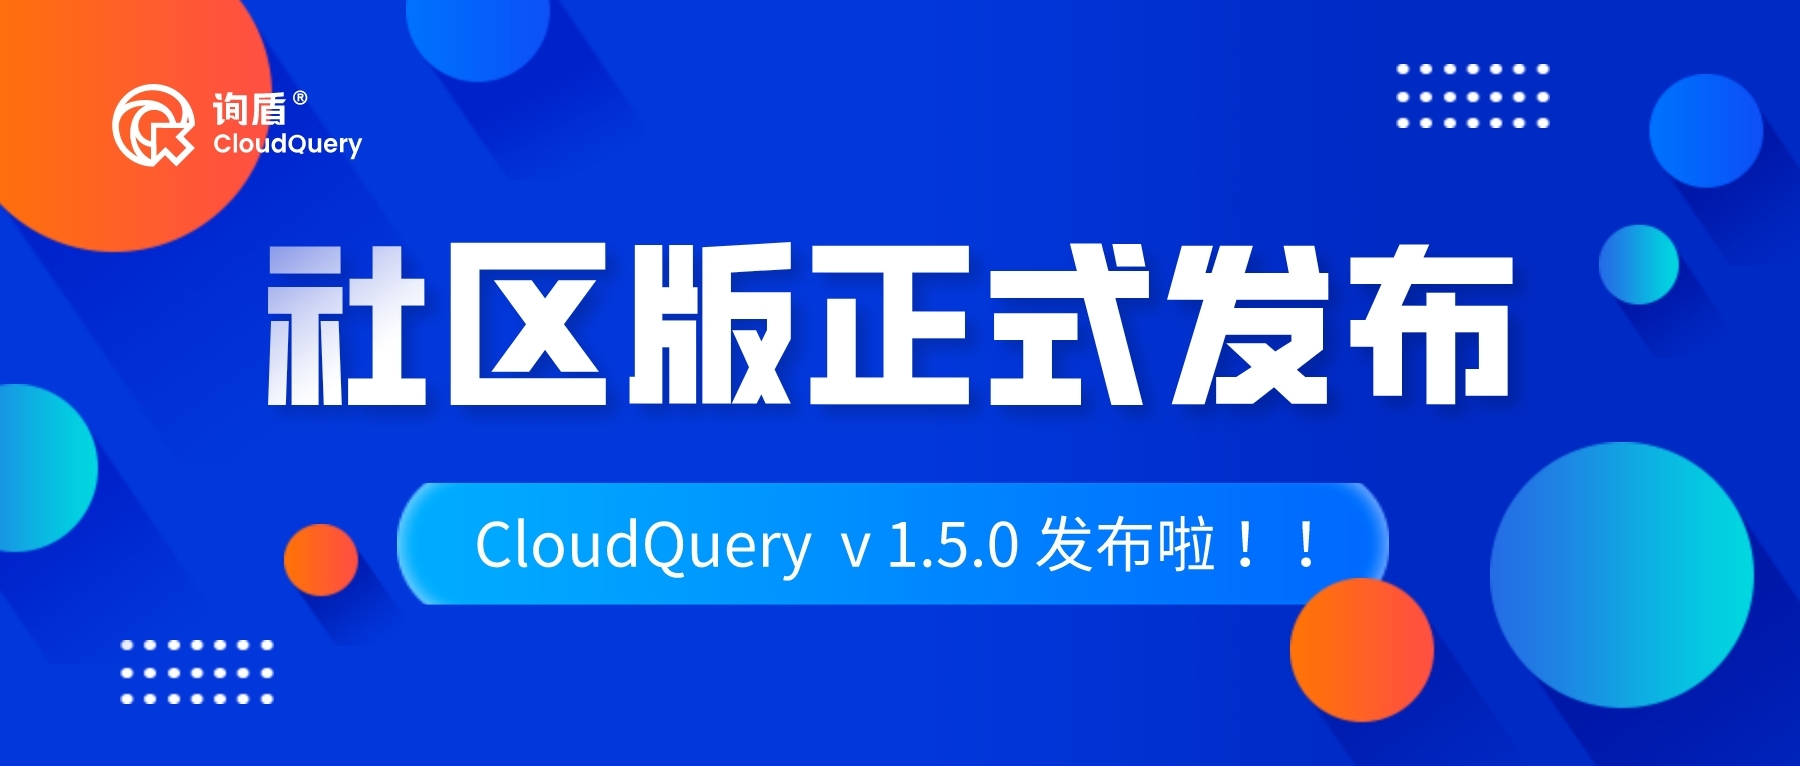 CloudQuery 询盾社区版 v1.5.0 正式发布！